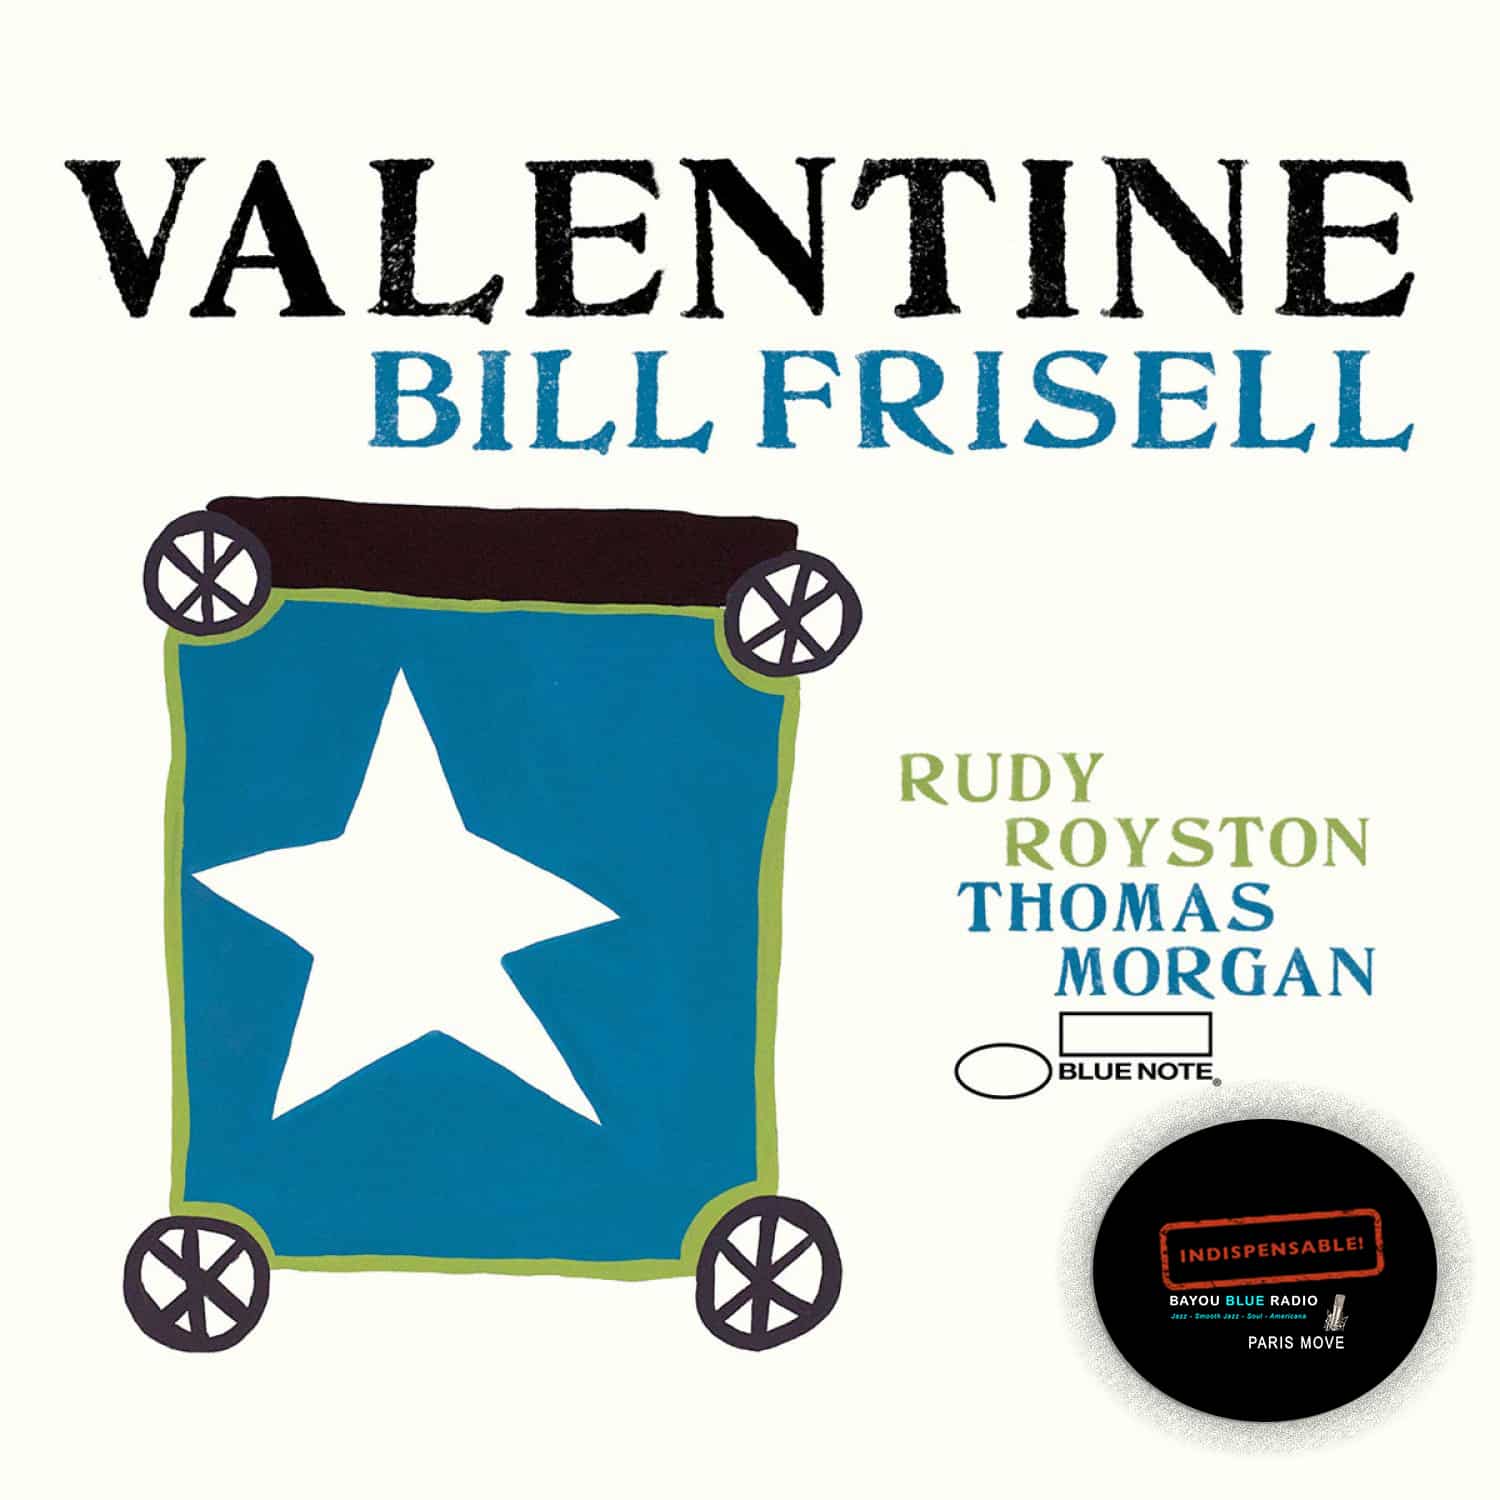 Bill Frisell – Valentine